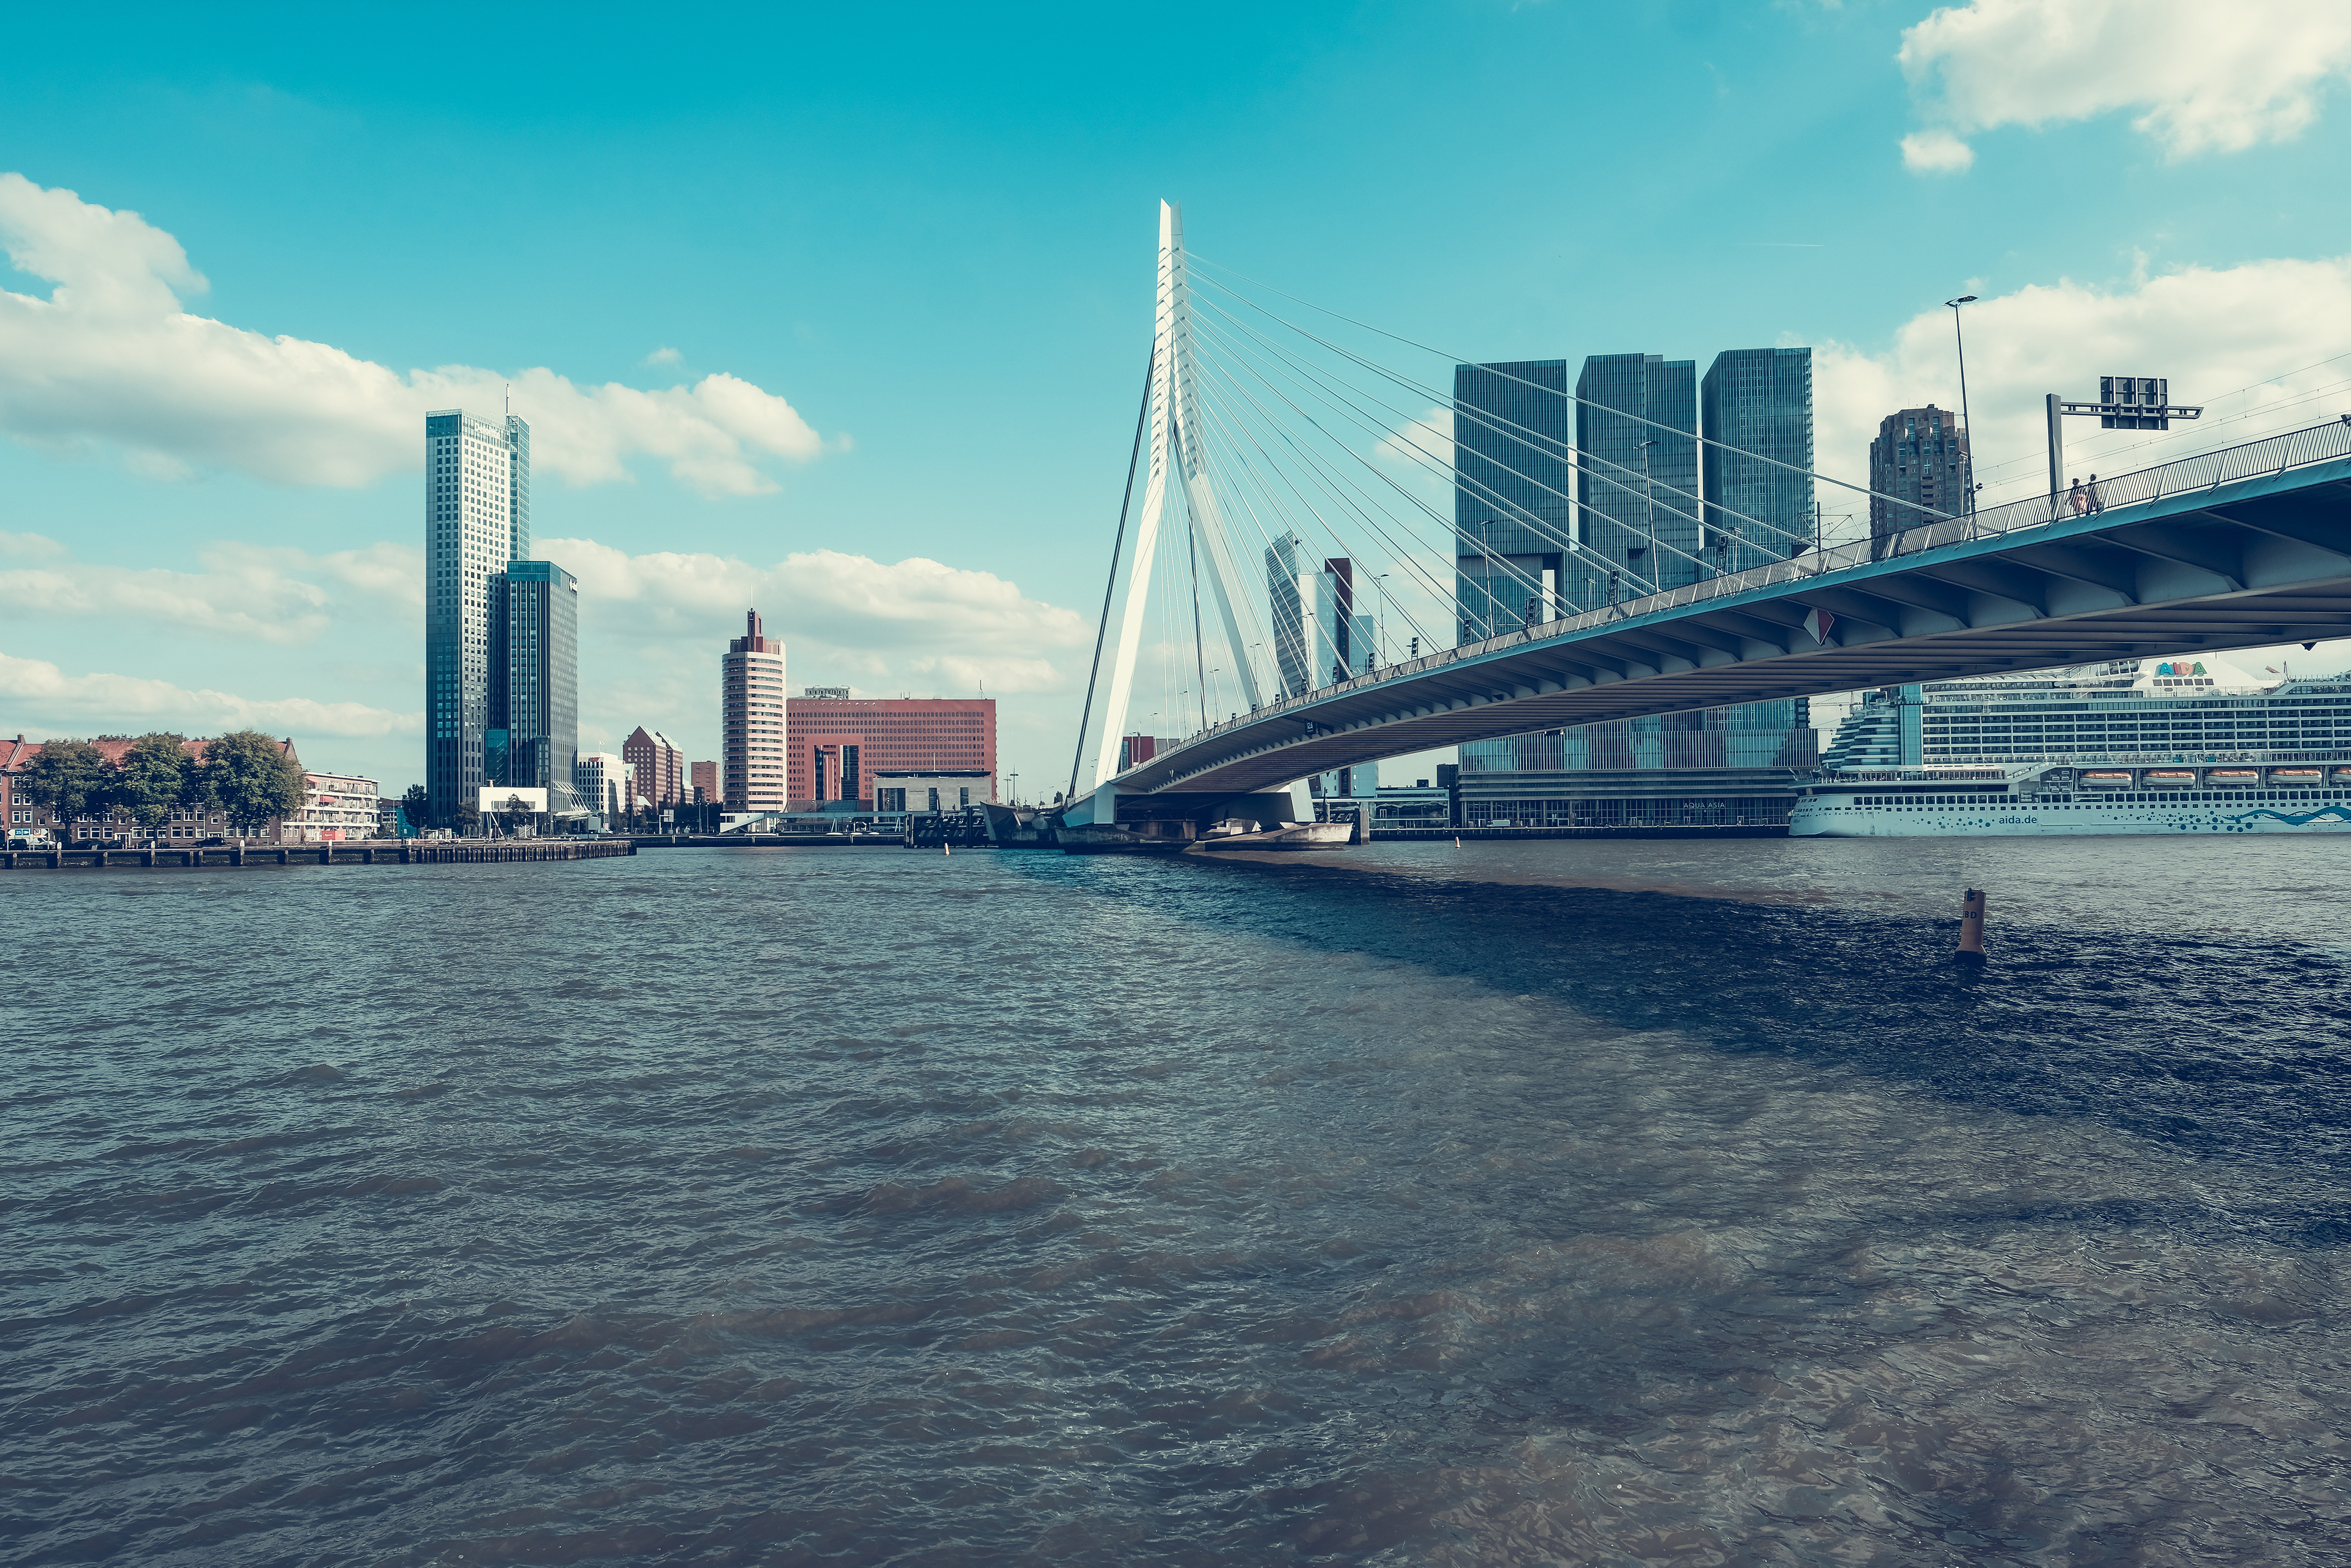 Photo of Erasmusbrug, Rotterdam, The Netherlands, displaying gray concrete bridge near buildings.